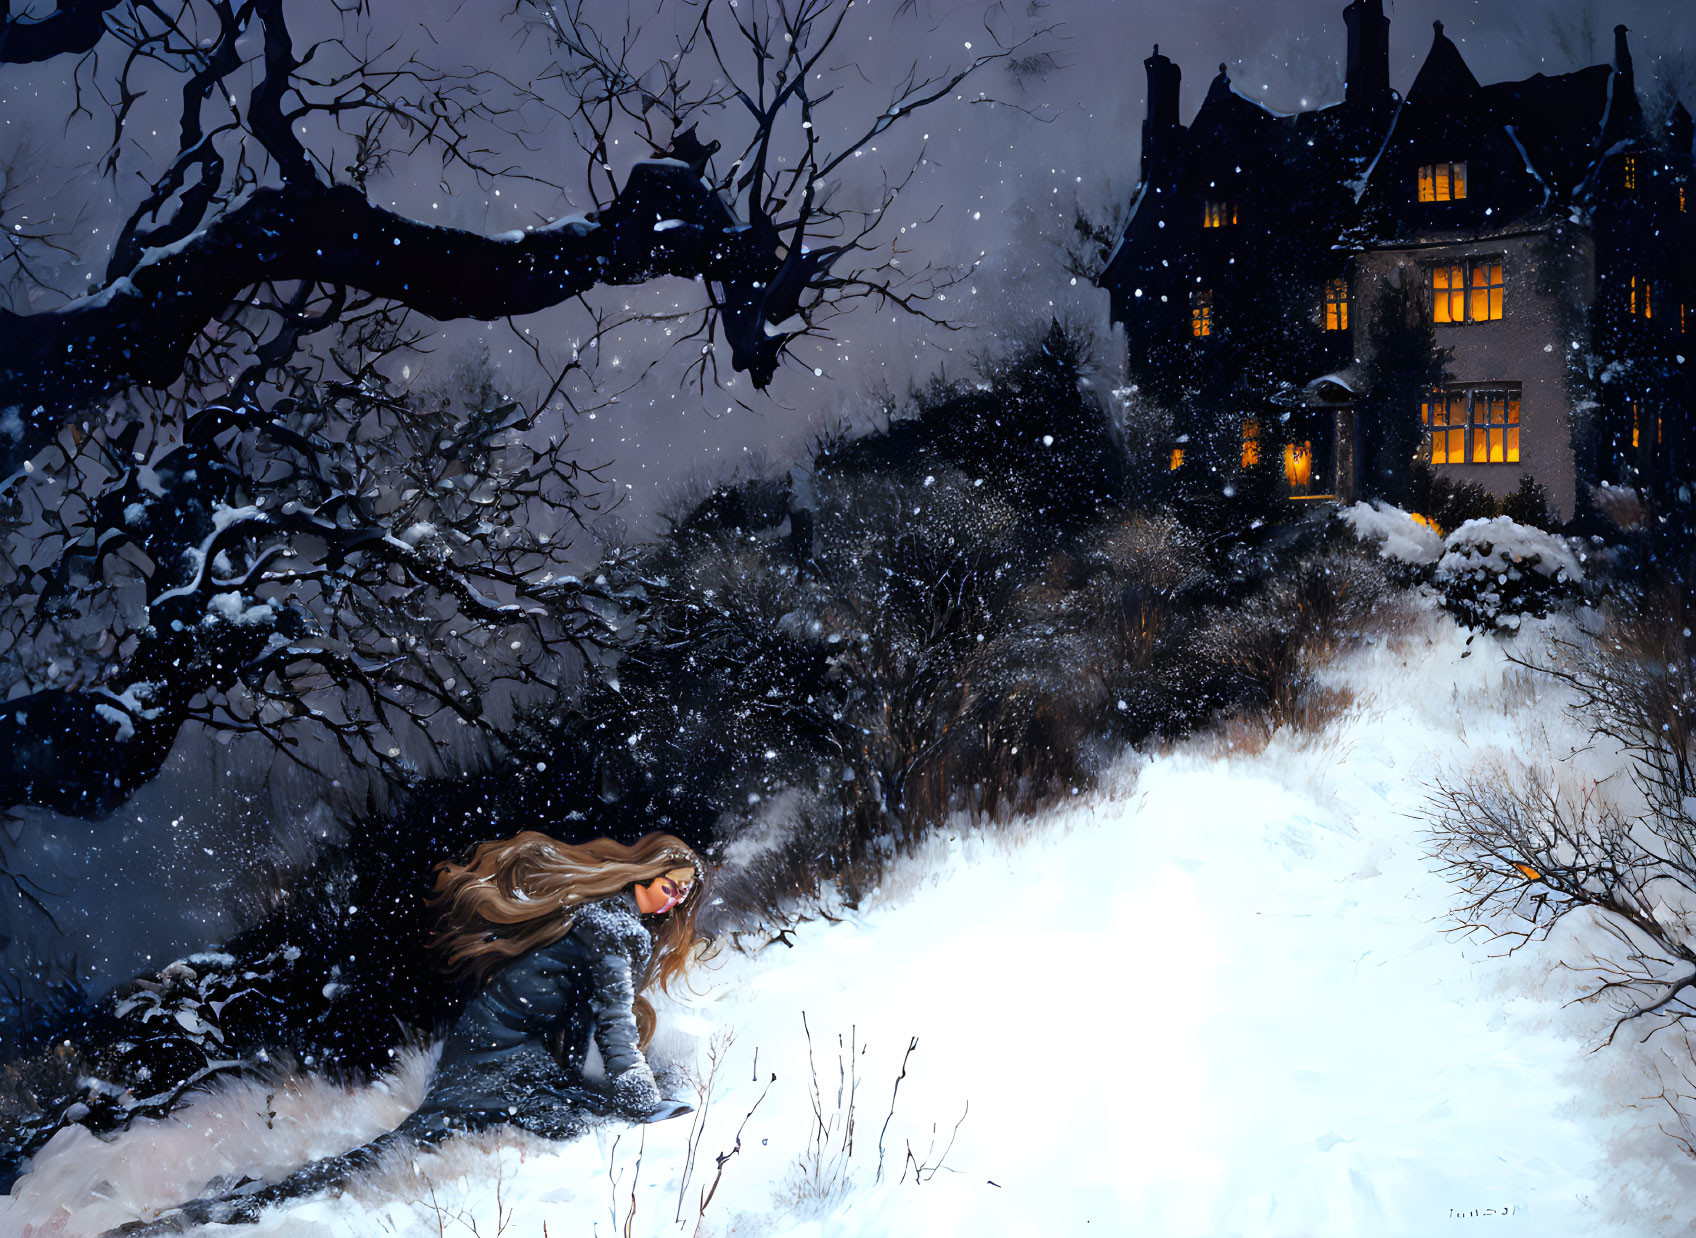 Woman in Dark Coat Approaching Large Lit House on Snowy Night